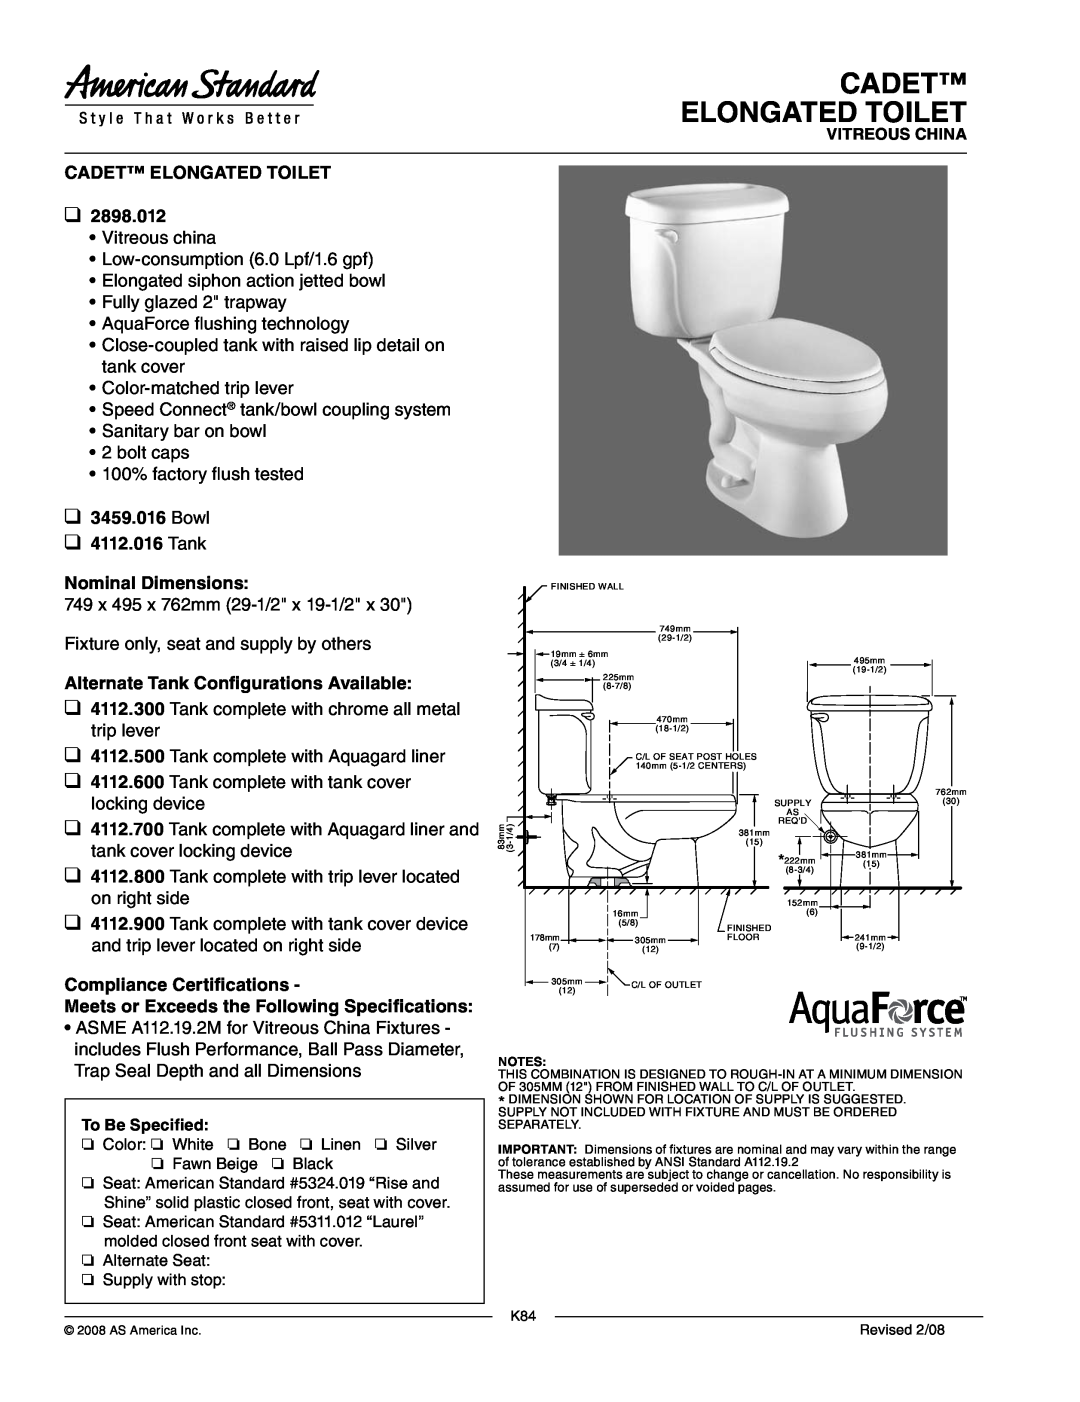 American Standard 2898.012 dimensions Cadet Elongated Toilet, Bowl 4112.016 Tank Nominal Dimensions 